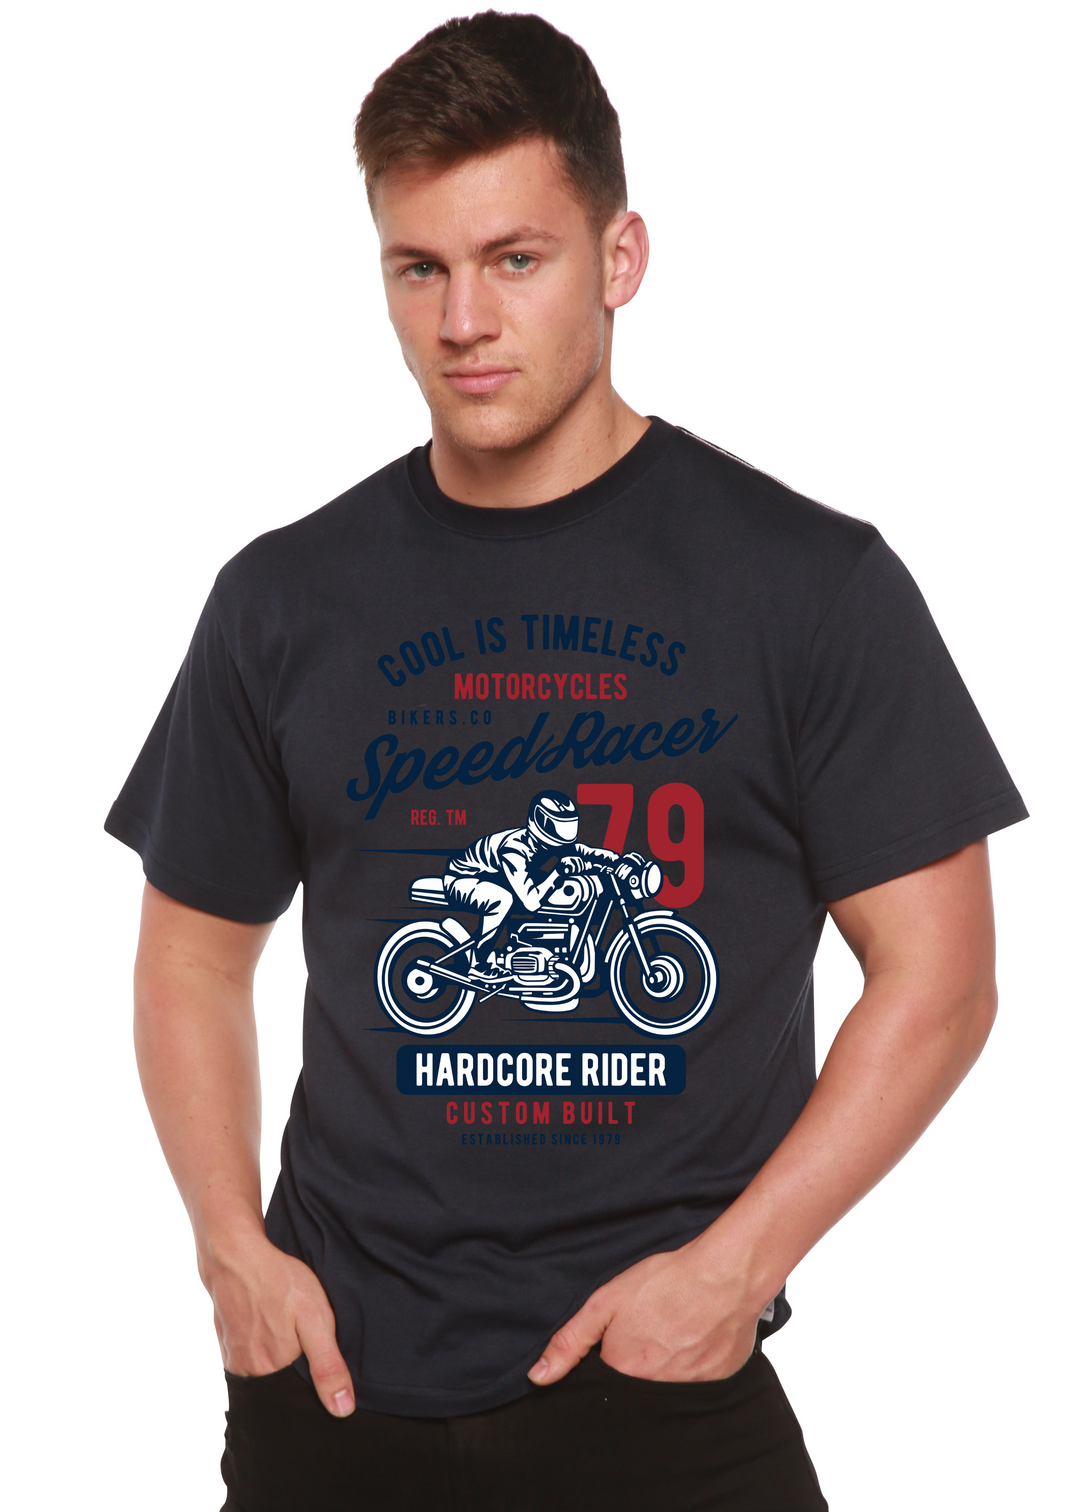 Speed Racer men's bamboo tshirt navy blue